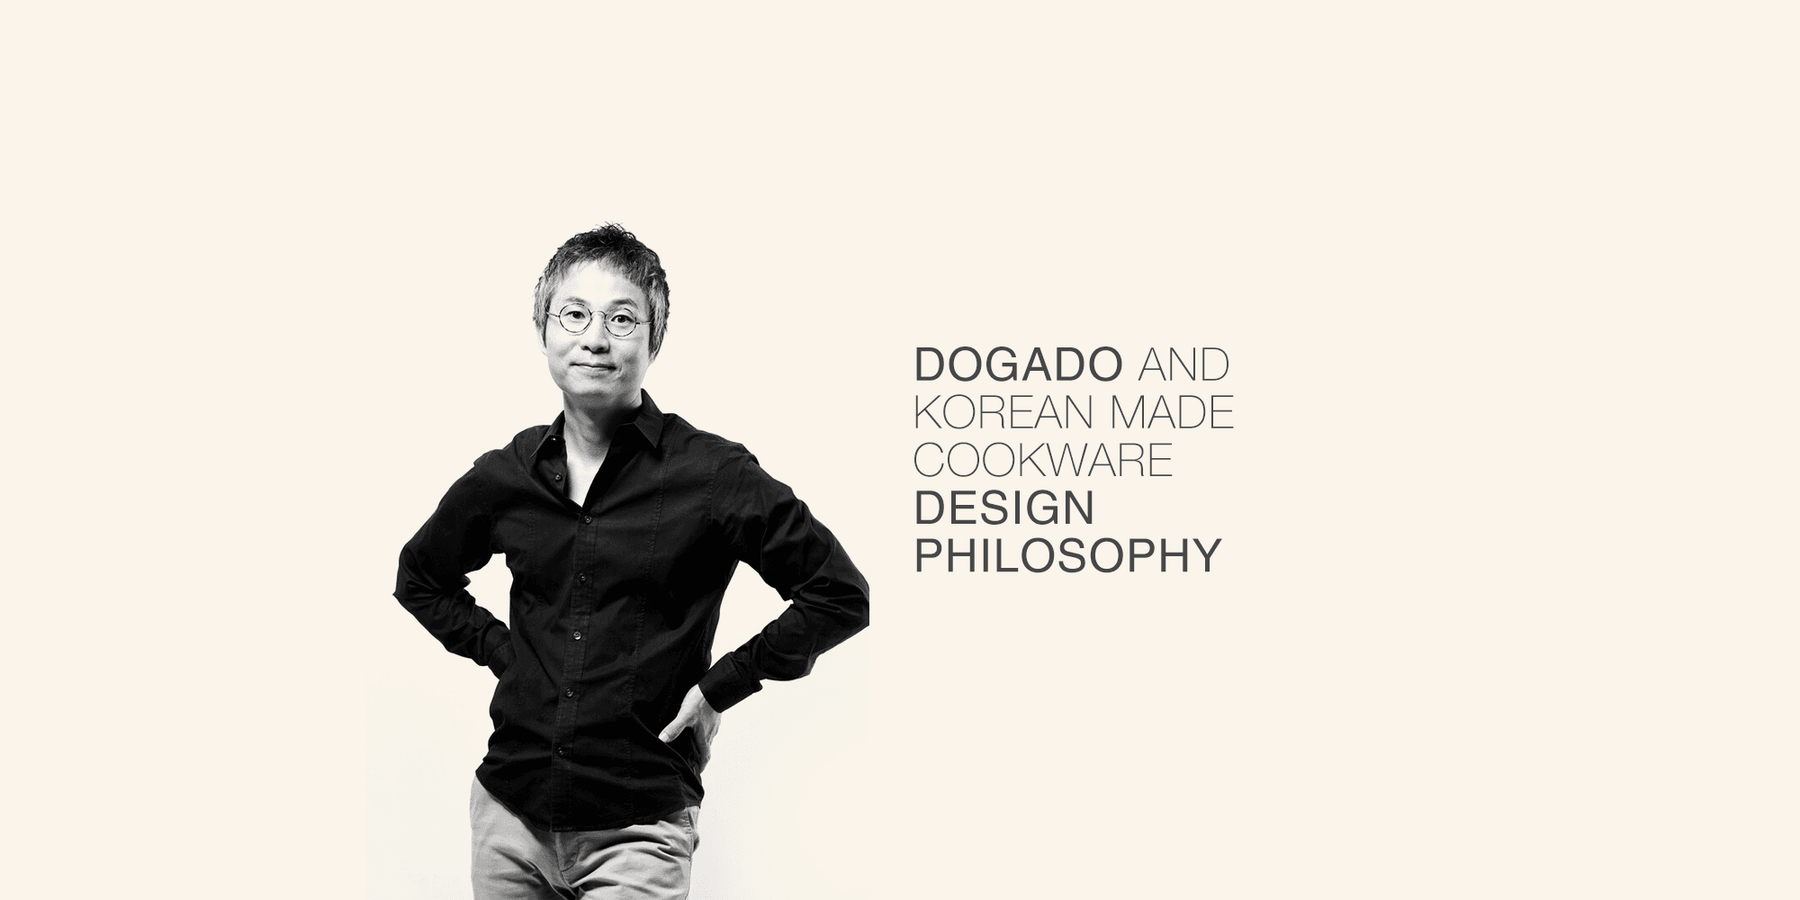 The Design Philosophy of dogado and Korean-made Cookware